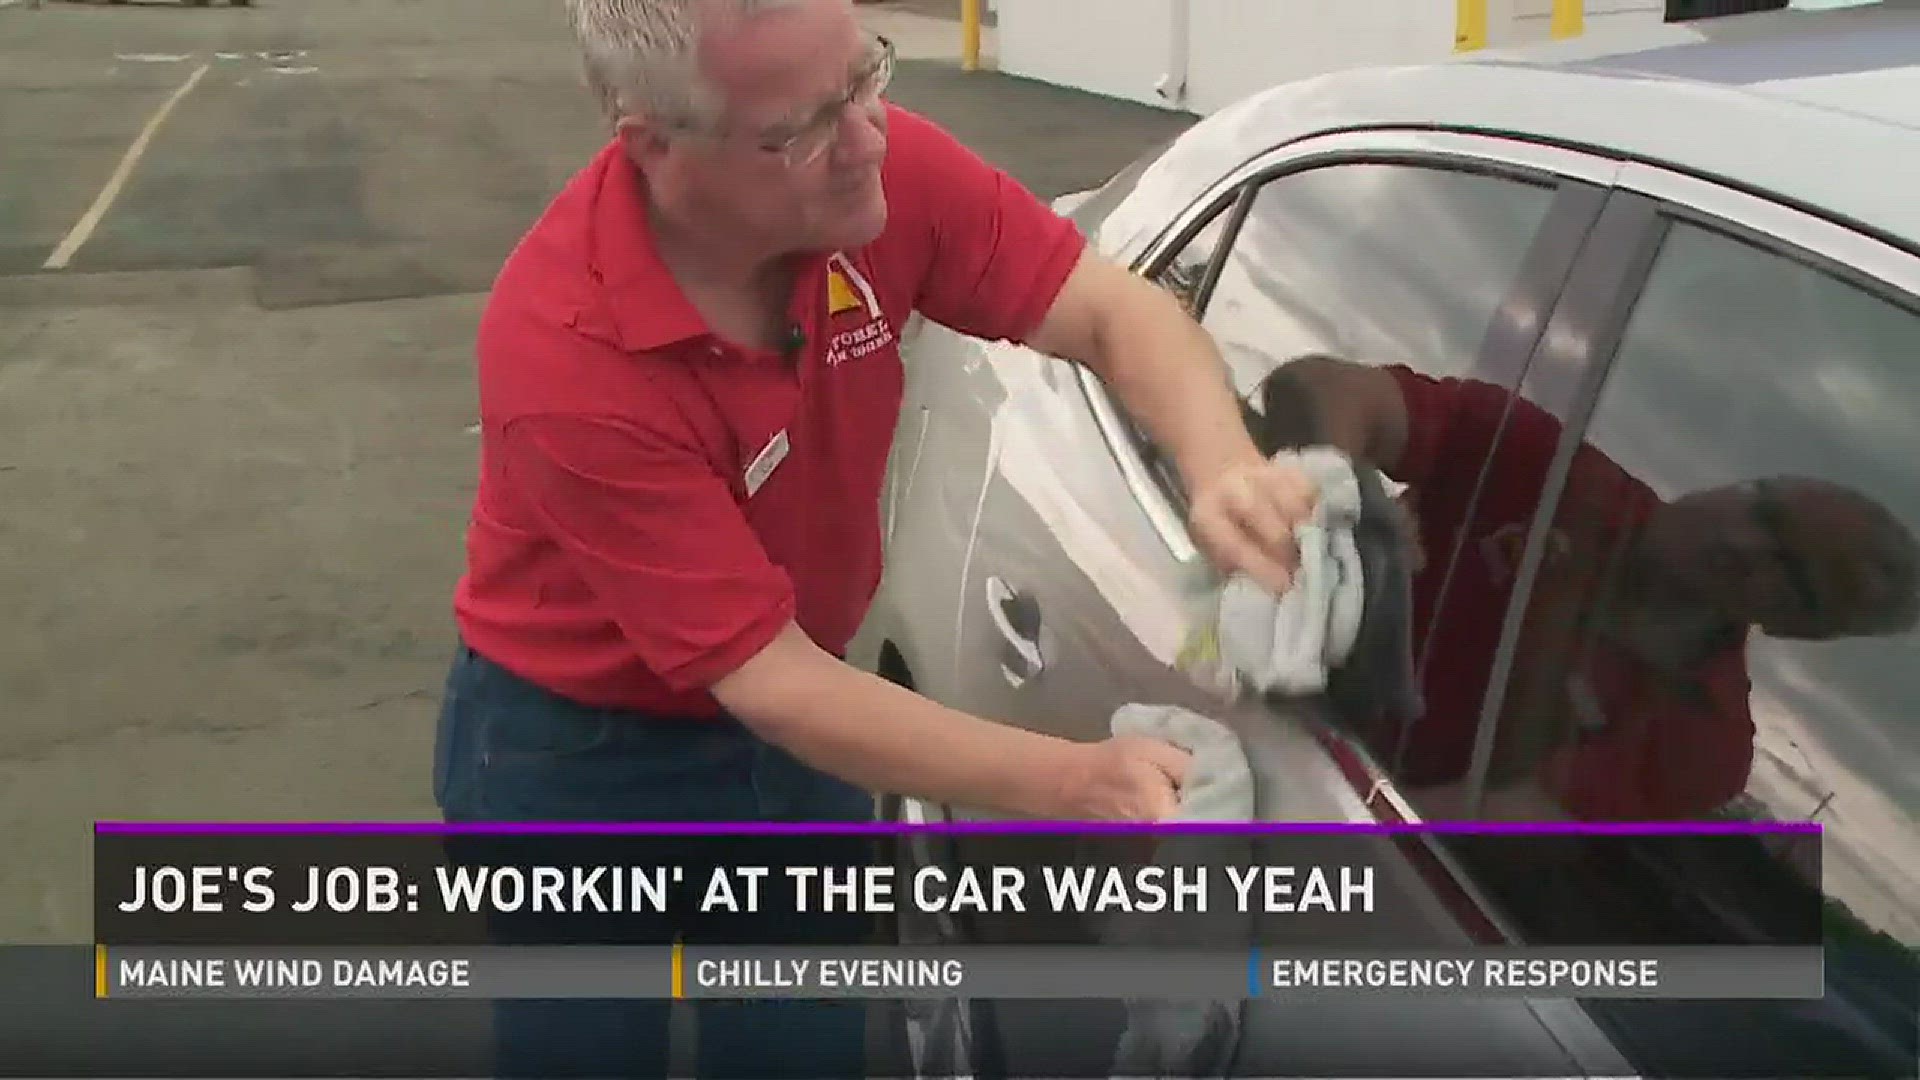 Joes Job: Workin' at the car wash